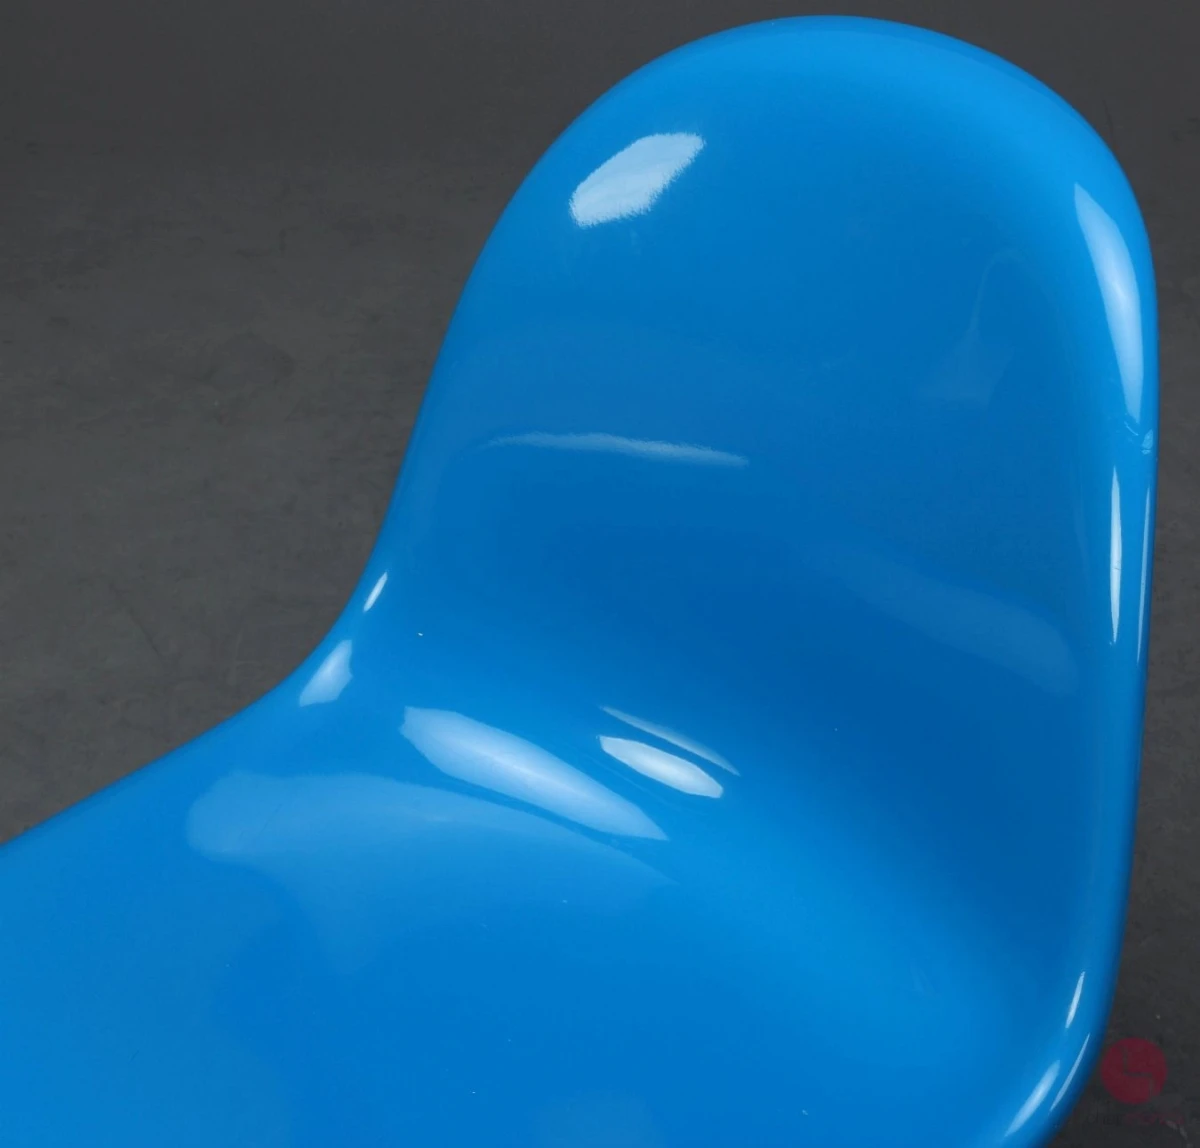 Vitra Panton Chair Classic Stuhl Blau Hochglanz gebraucht